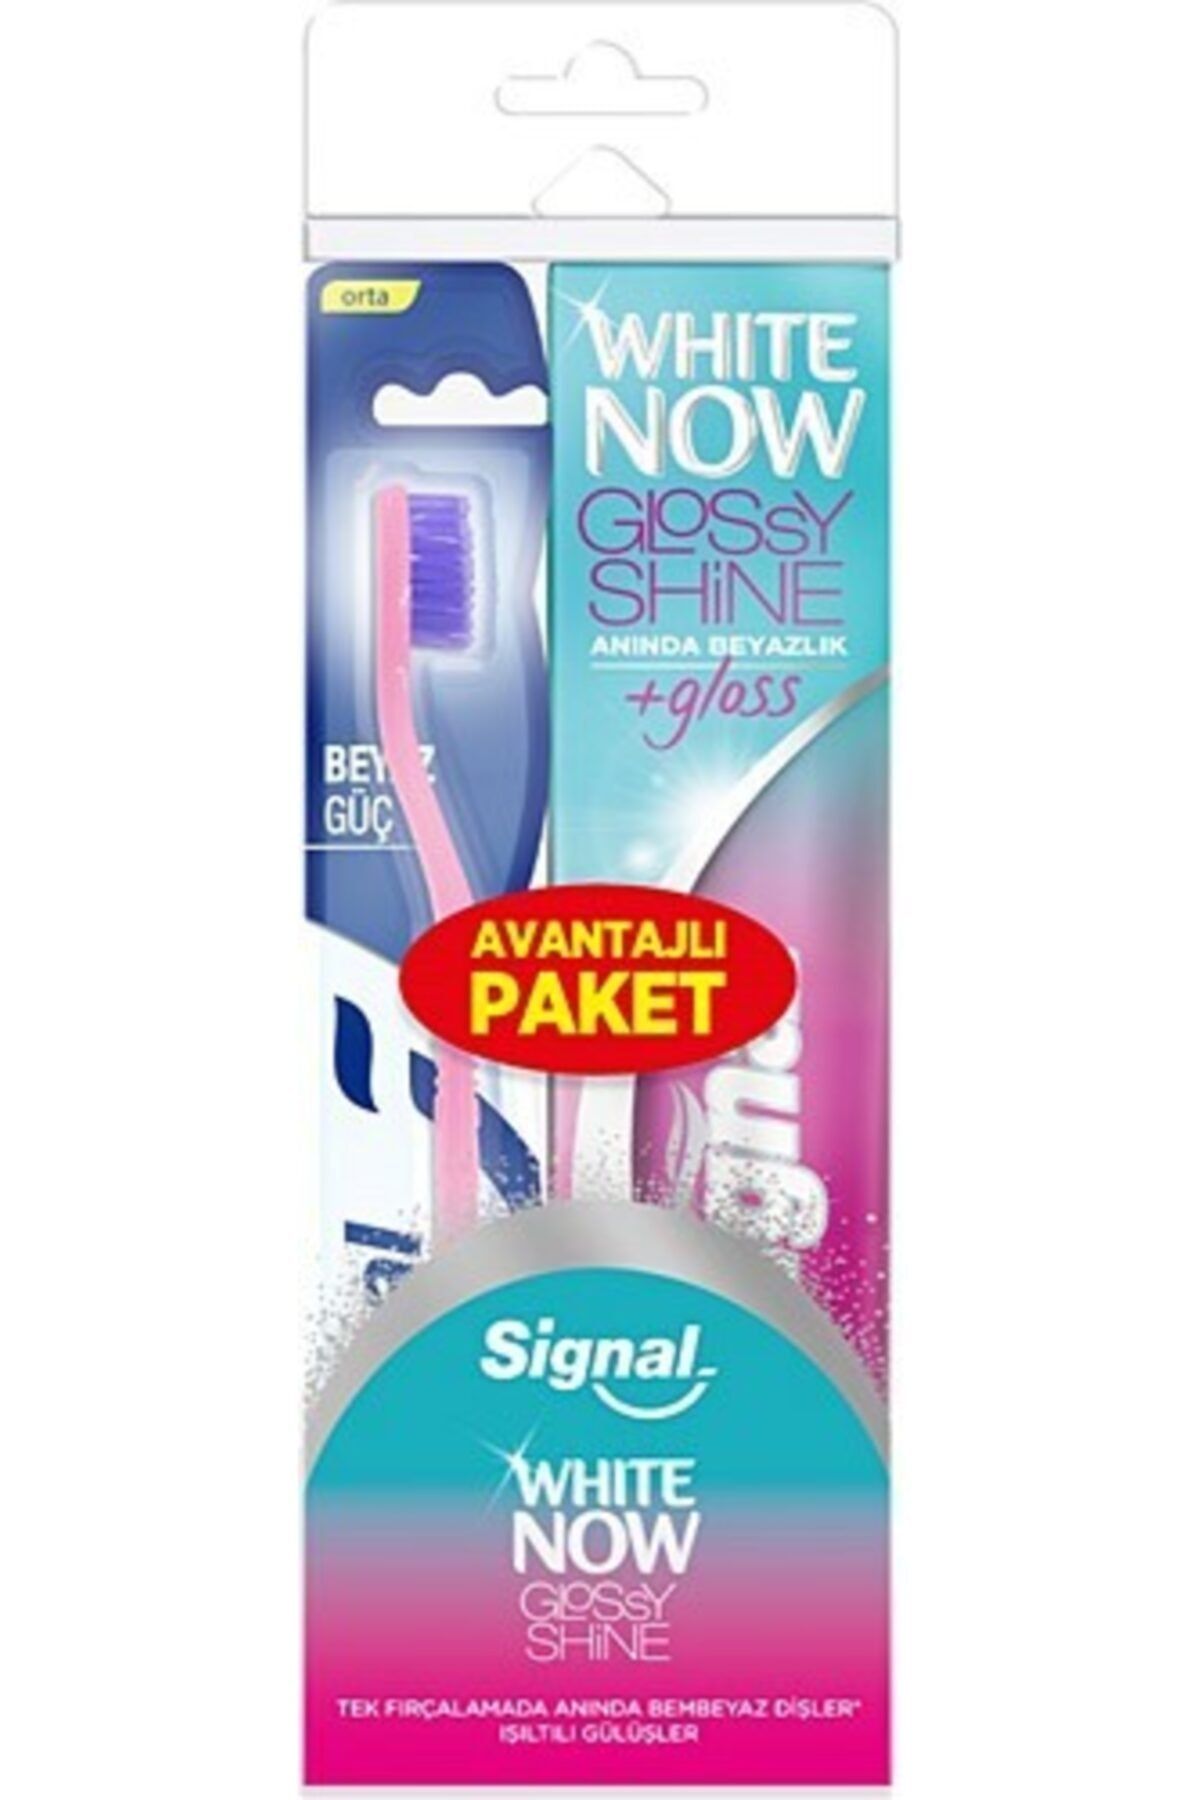 Signal White Now Glossy Shine Diş Macunu 75 Ml + Orta Fırça Set